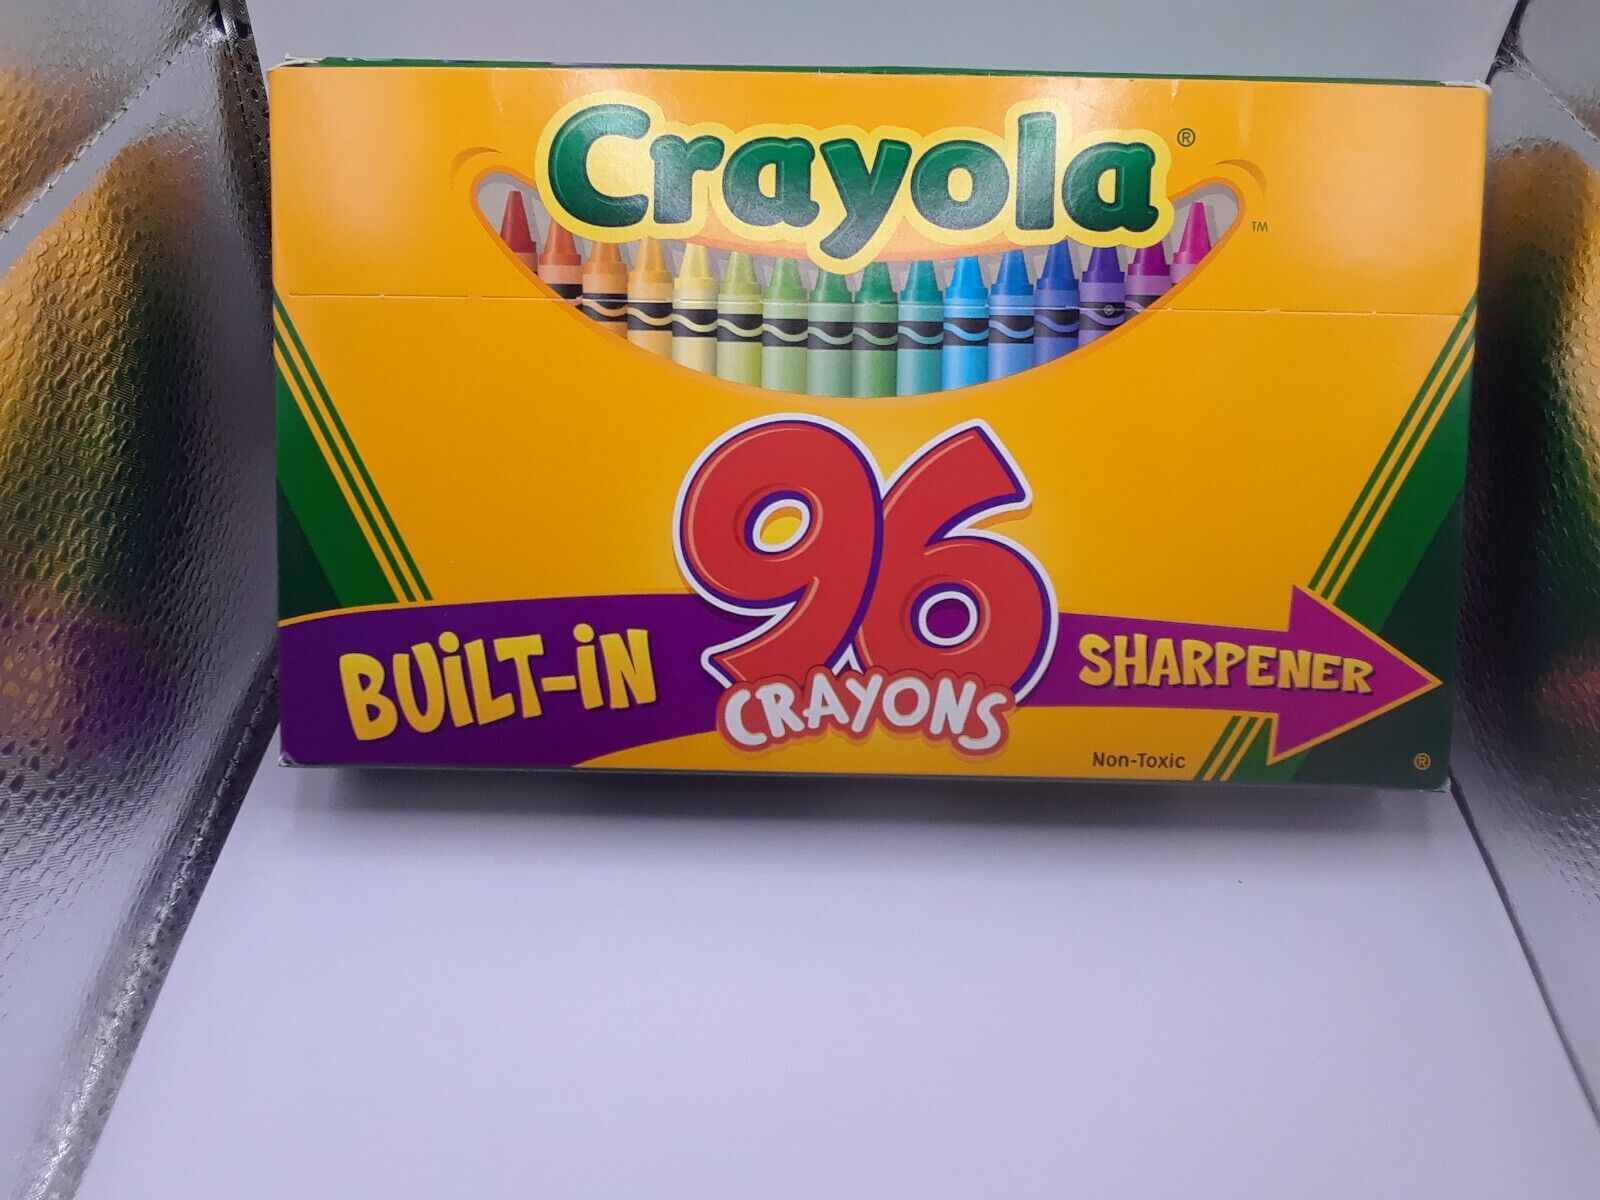  Crayola Crayons - 96 Pack With Sharpener -  2004 Made In USA  Big Box